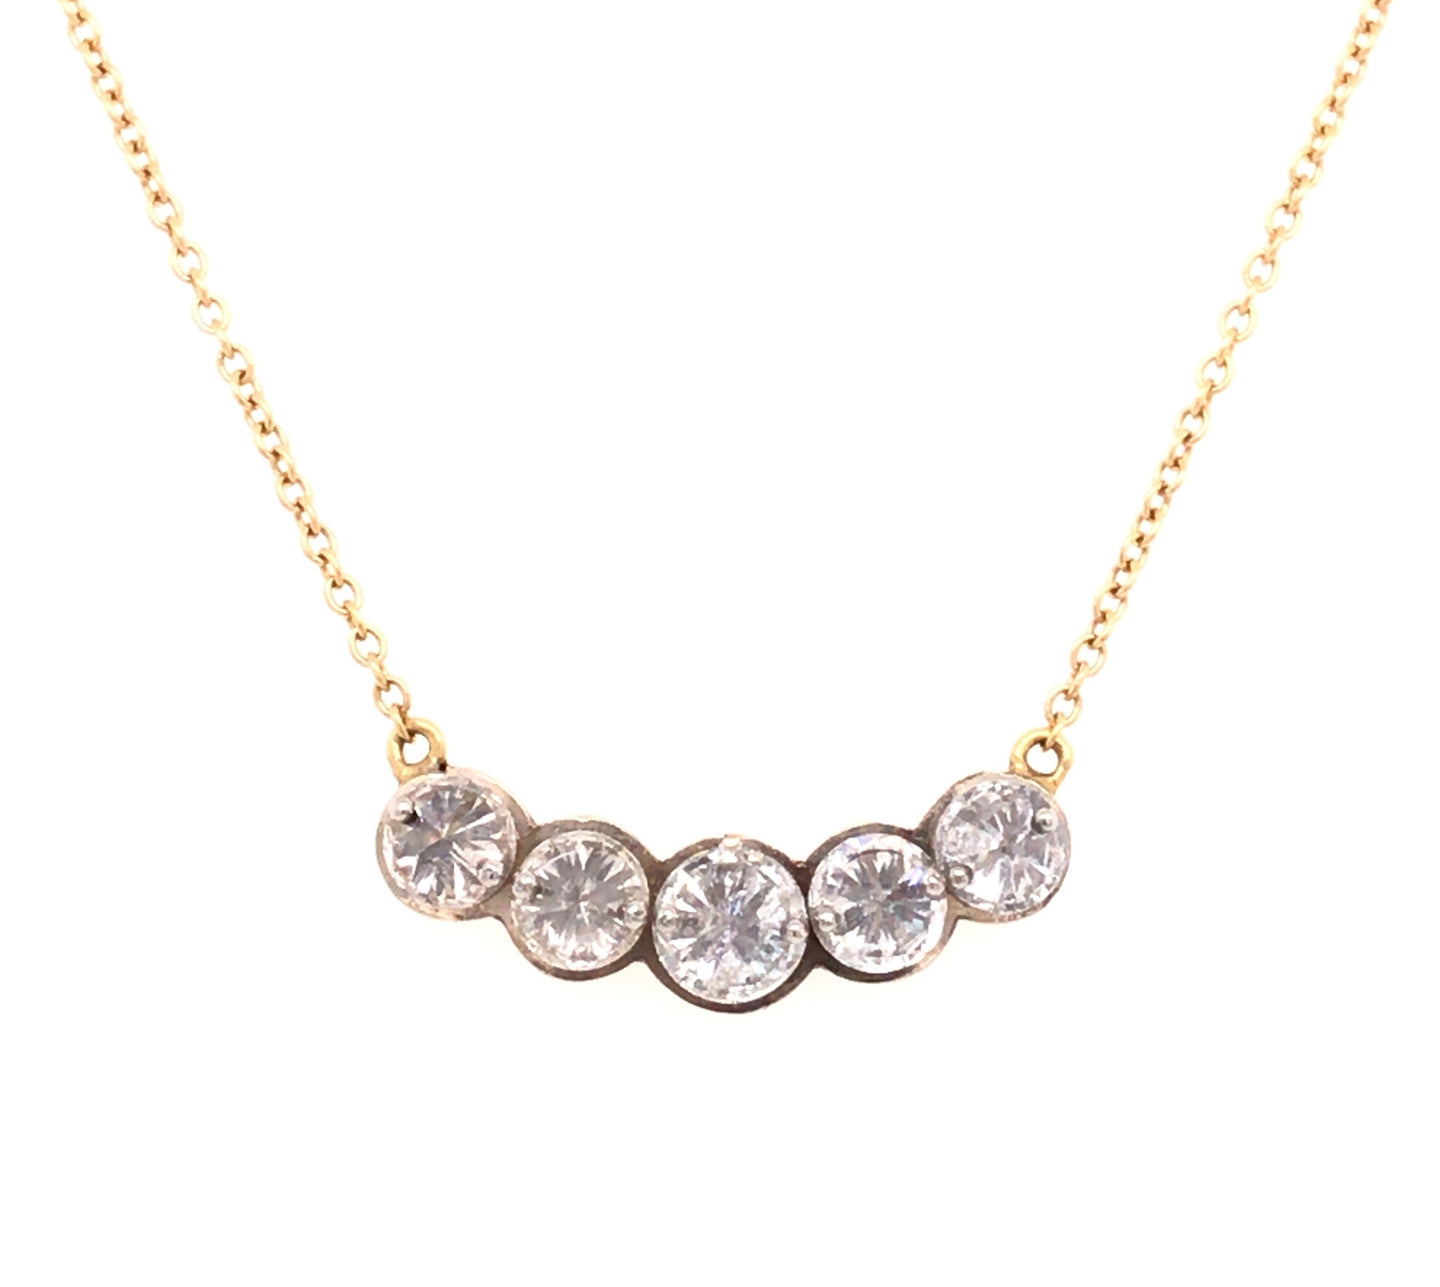 Five Inverted Diamond Necklace